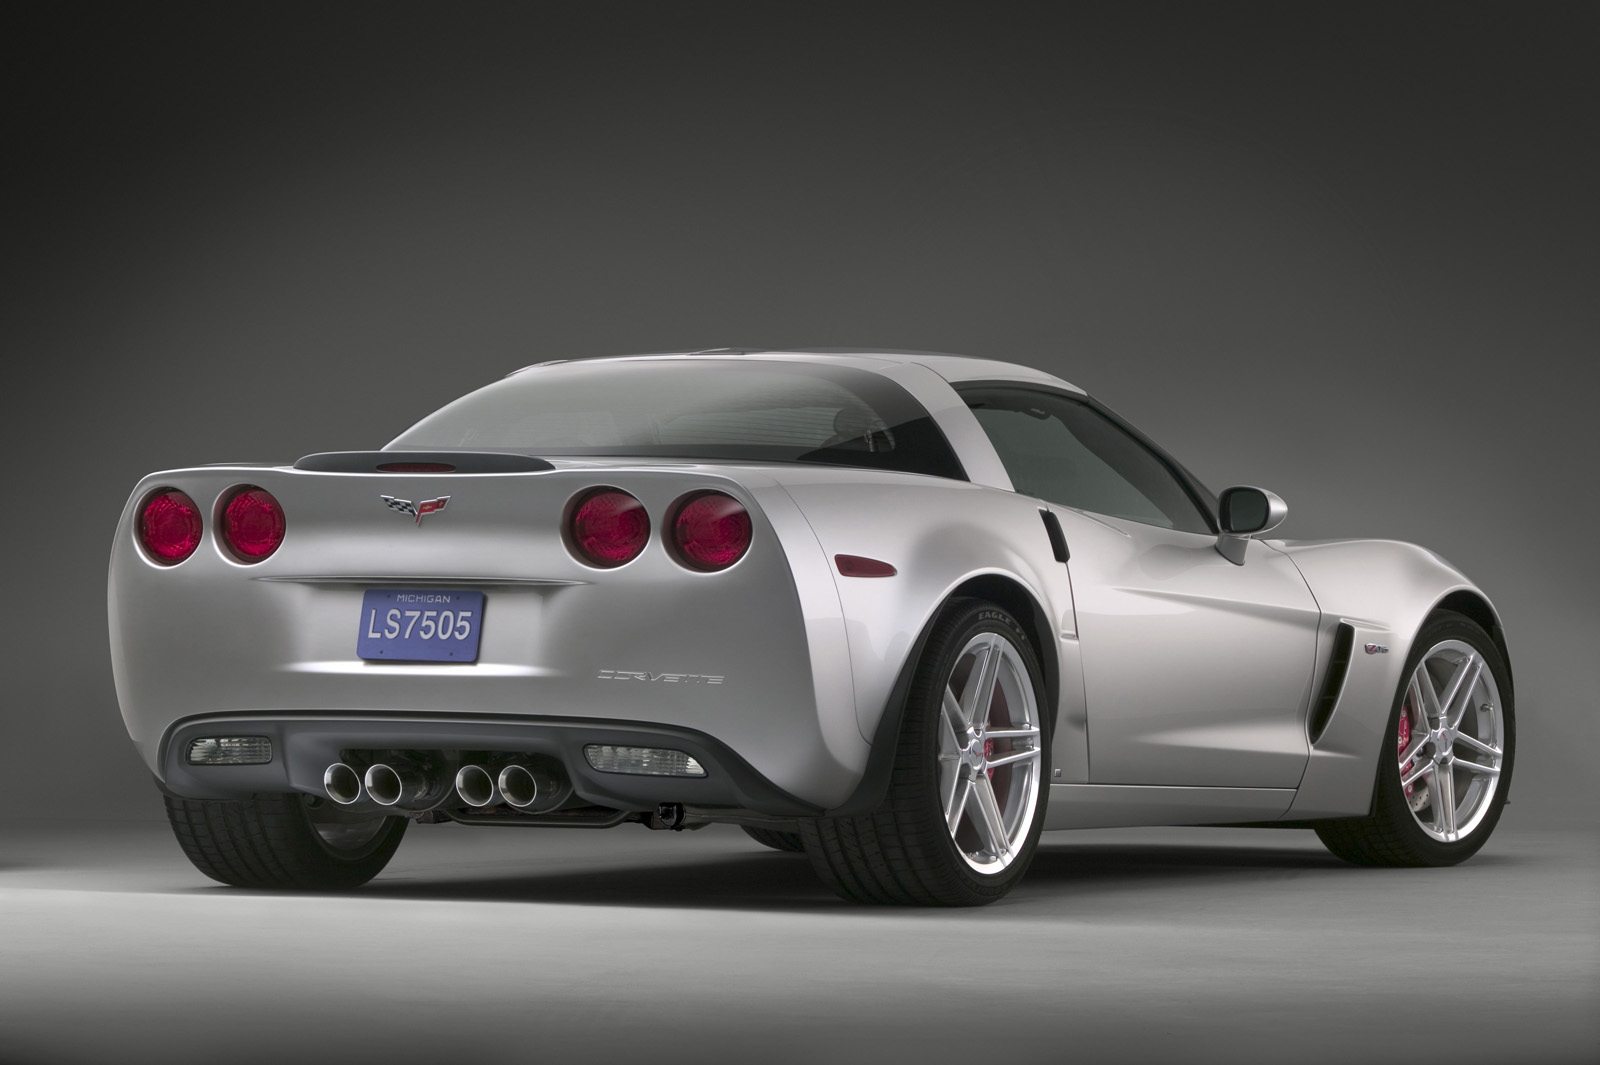 2006 C6 Corvette Pictures & Images.